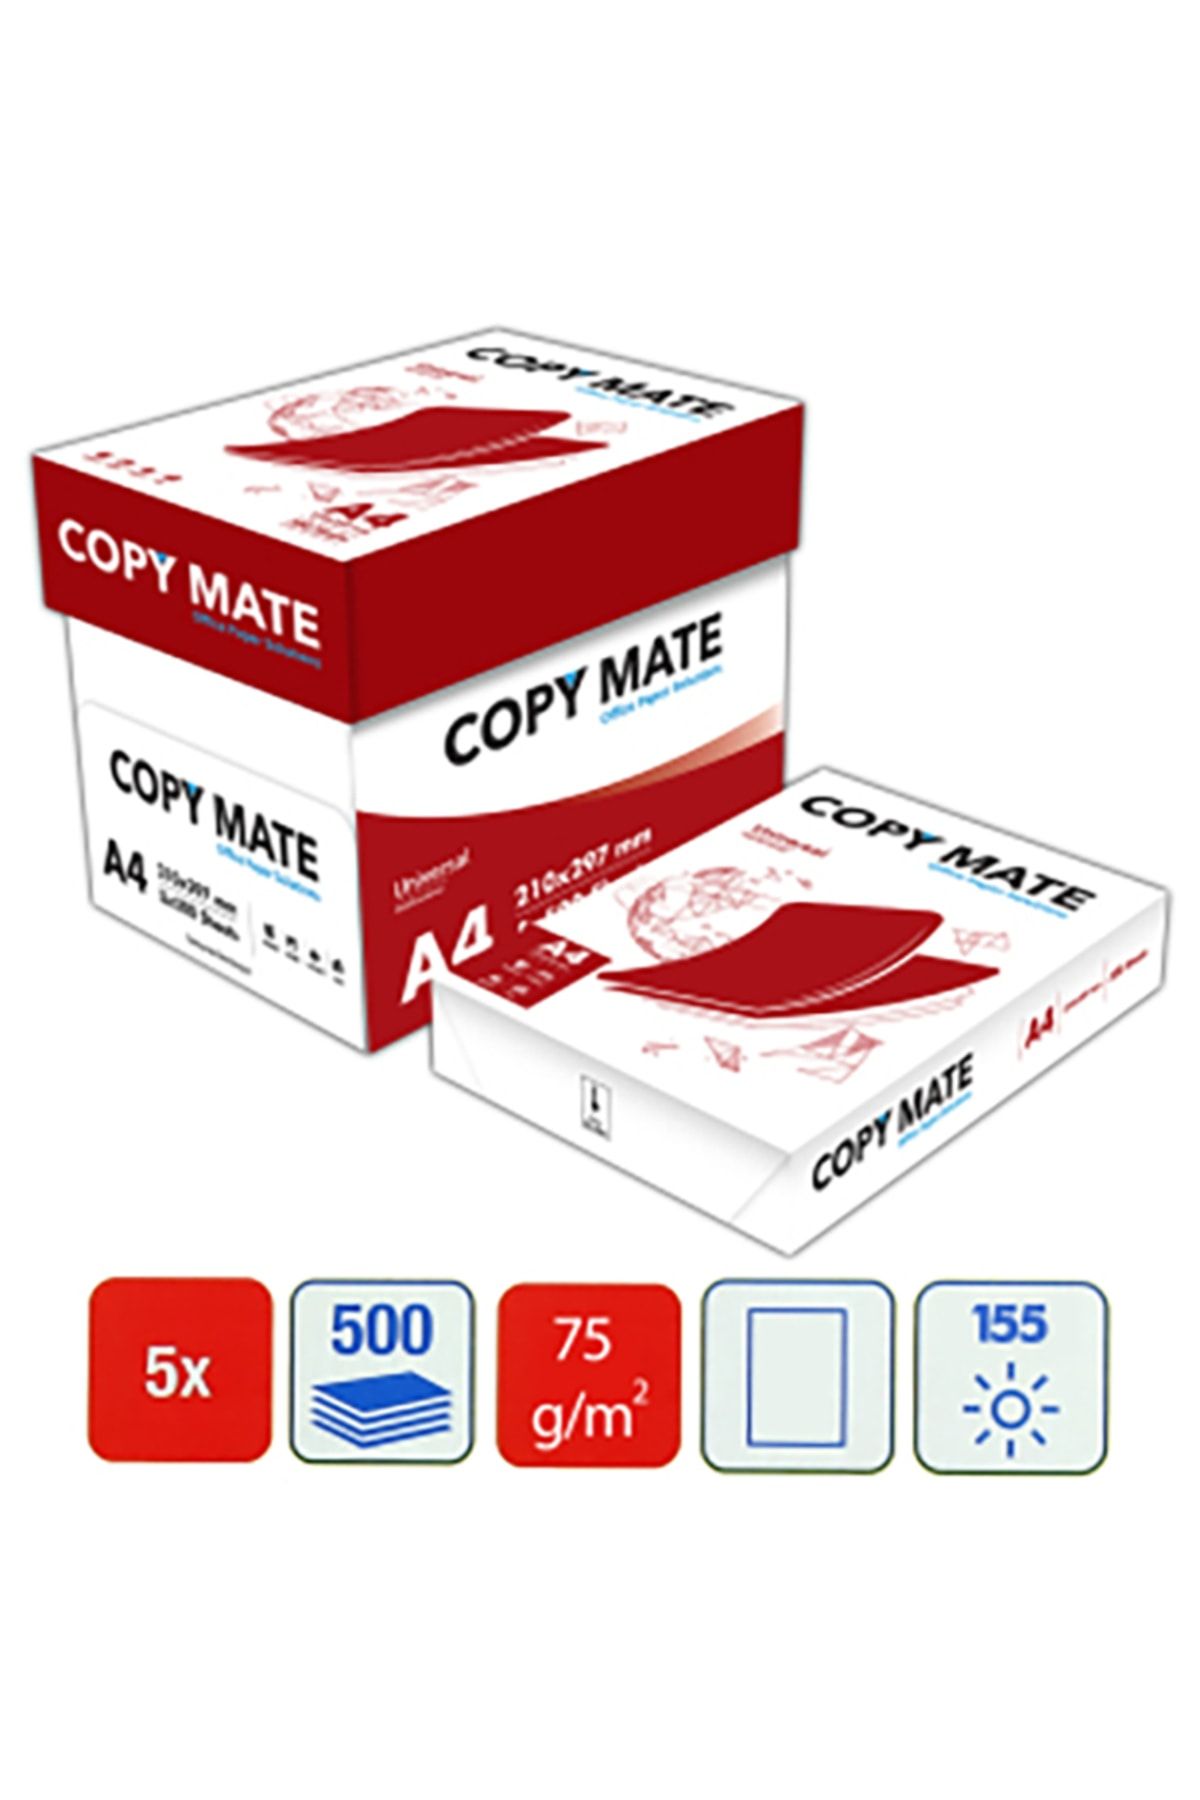 Copymate Copy Mate A4 Fotokopi Kağıdı 1 Koli Paket 2500 Adet